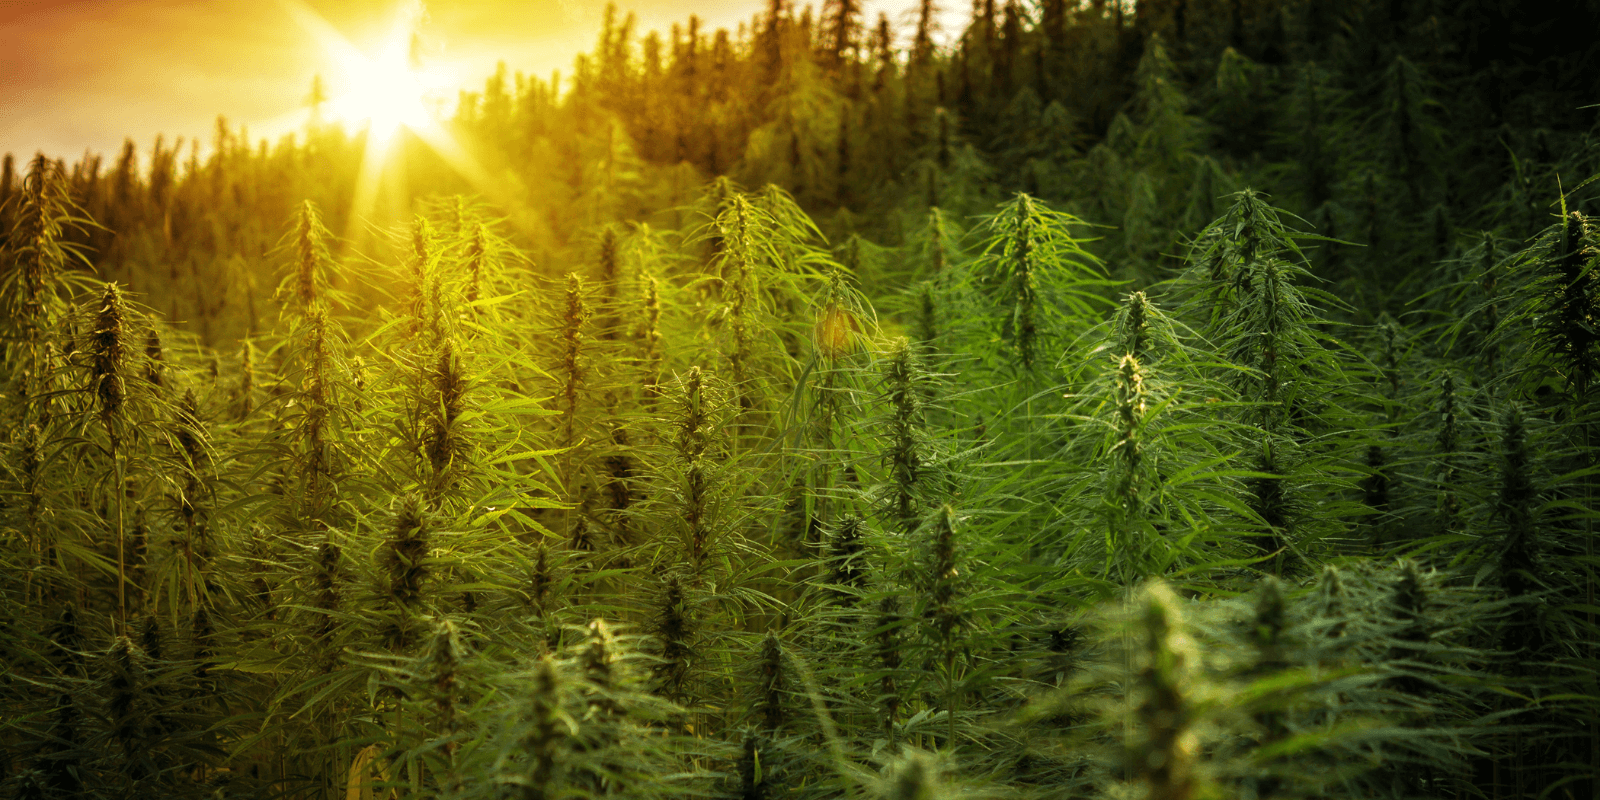 Buying bulk marijuana seeds for outdoor growing